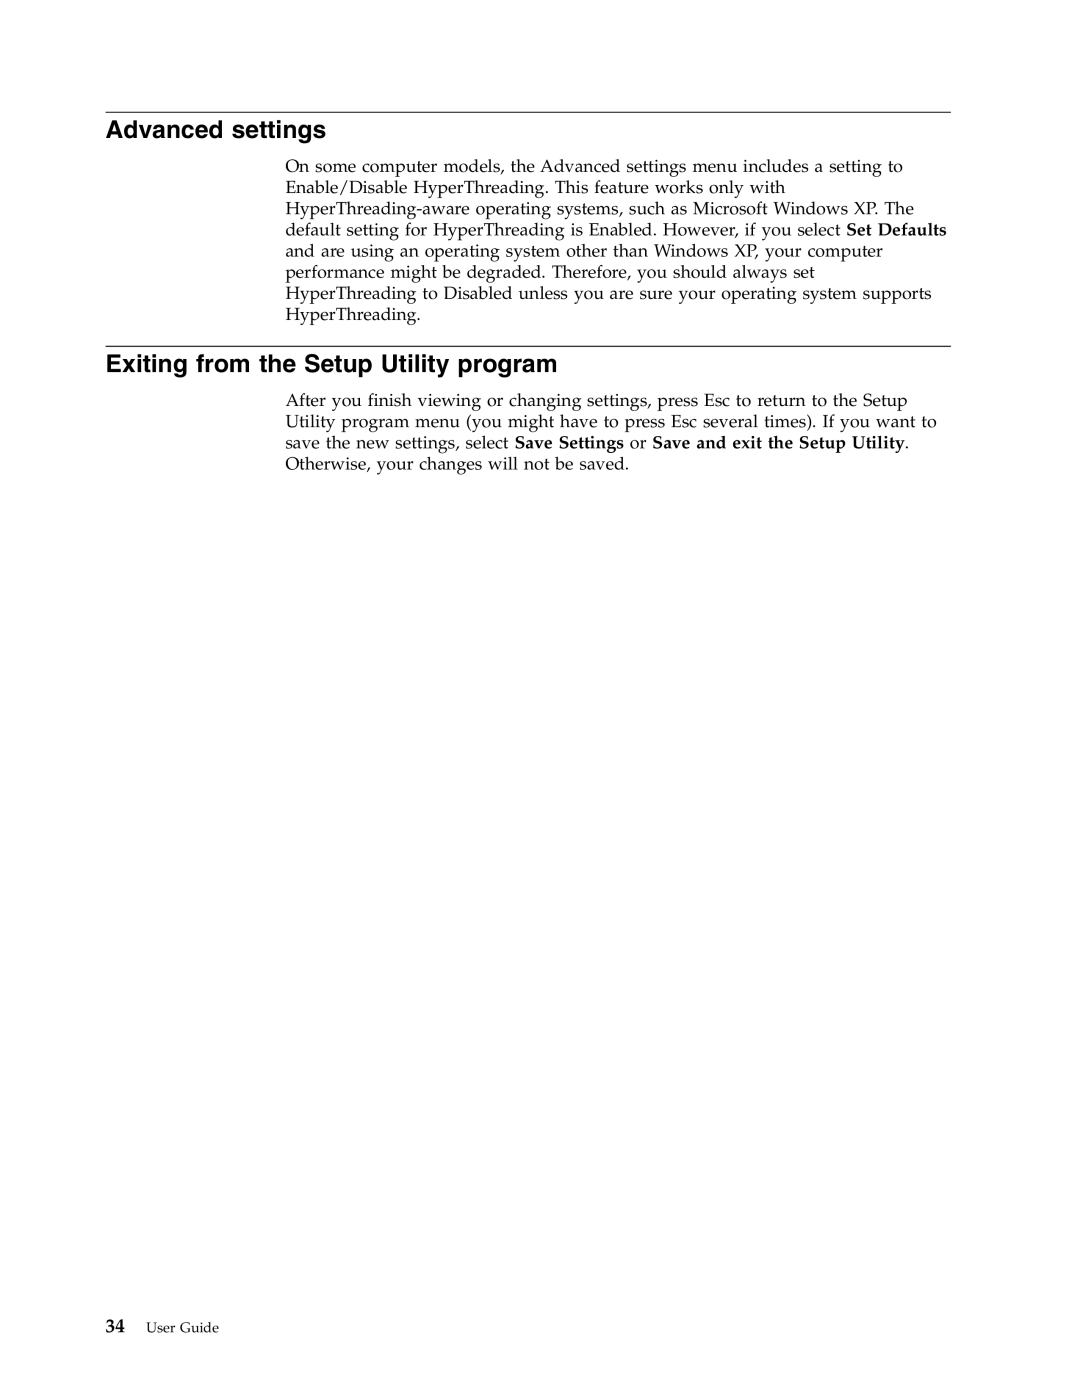 Lenovo 6019 manual Advanced settings, Exiting from the Setup Utility program, 34User Guide 